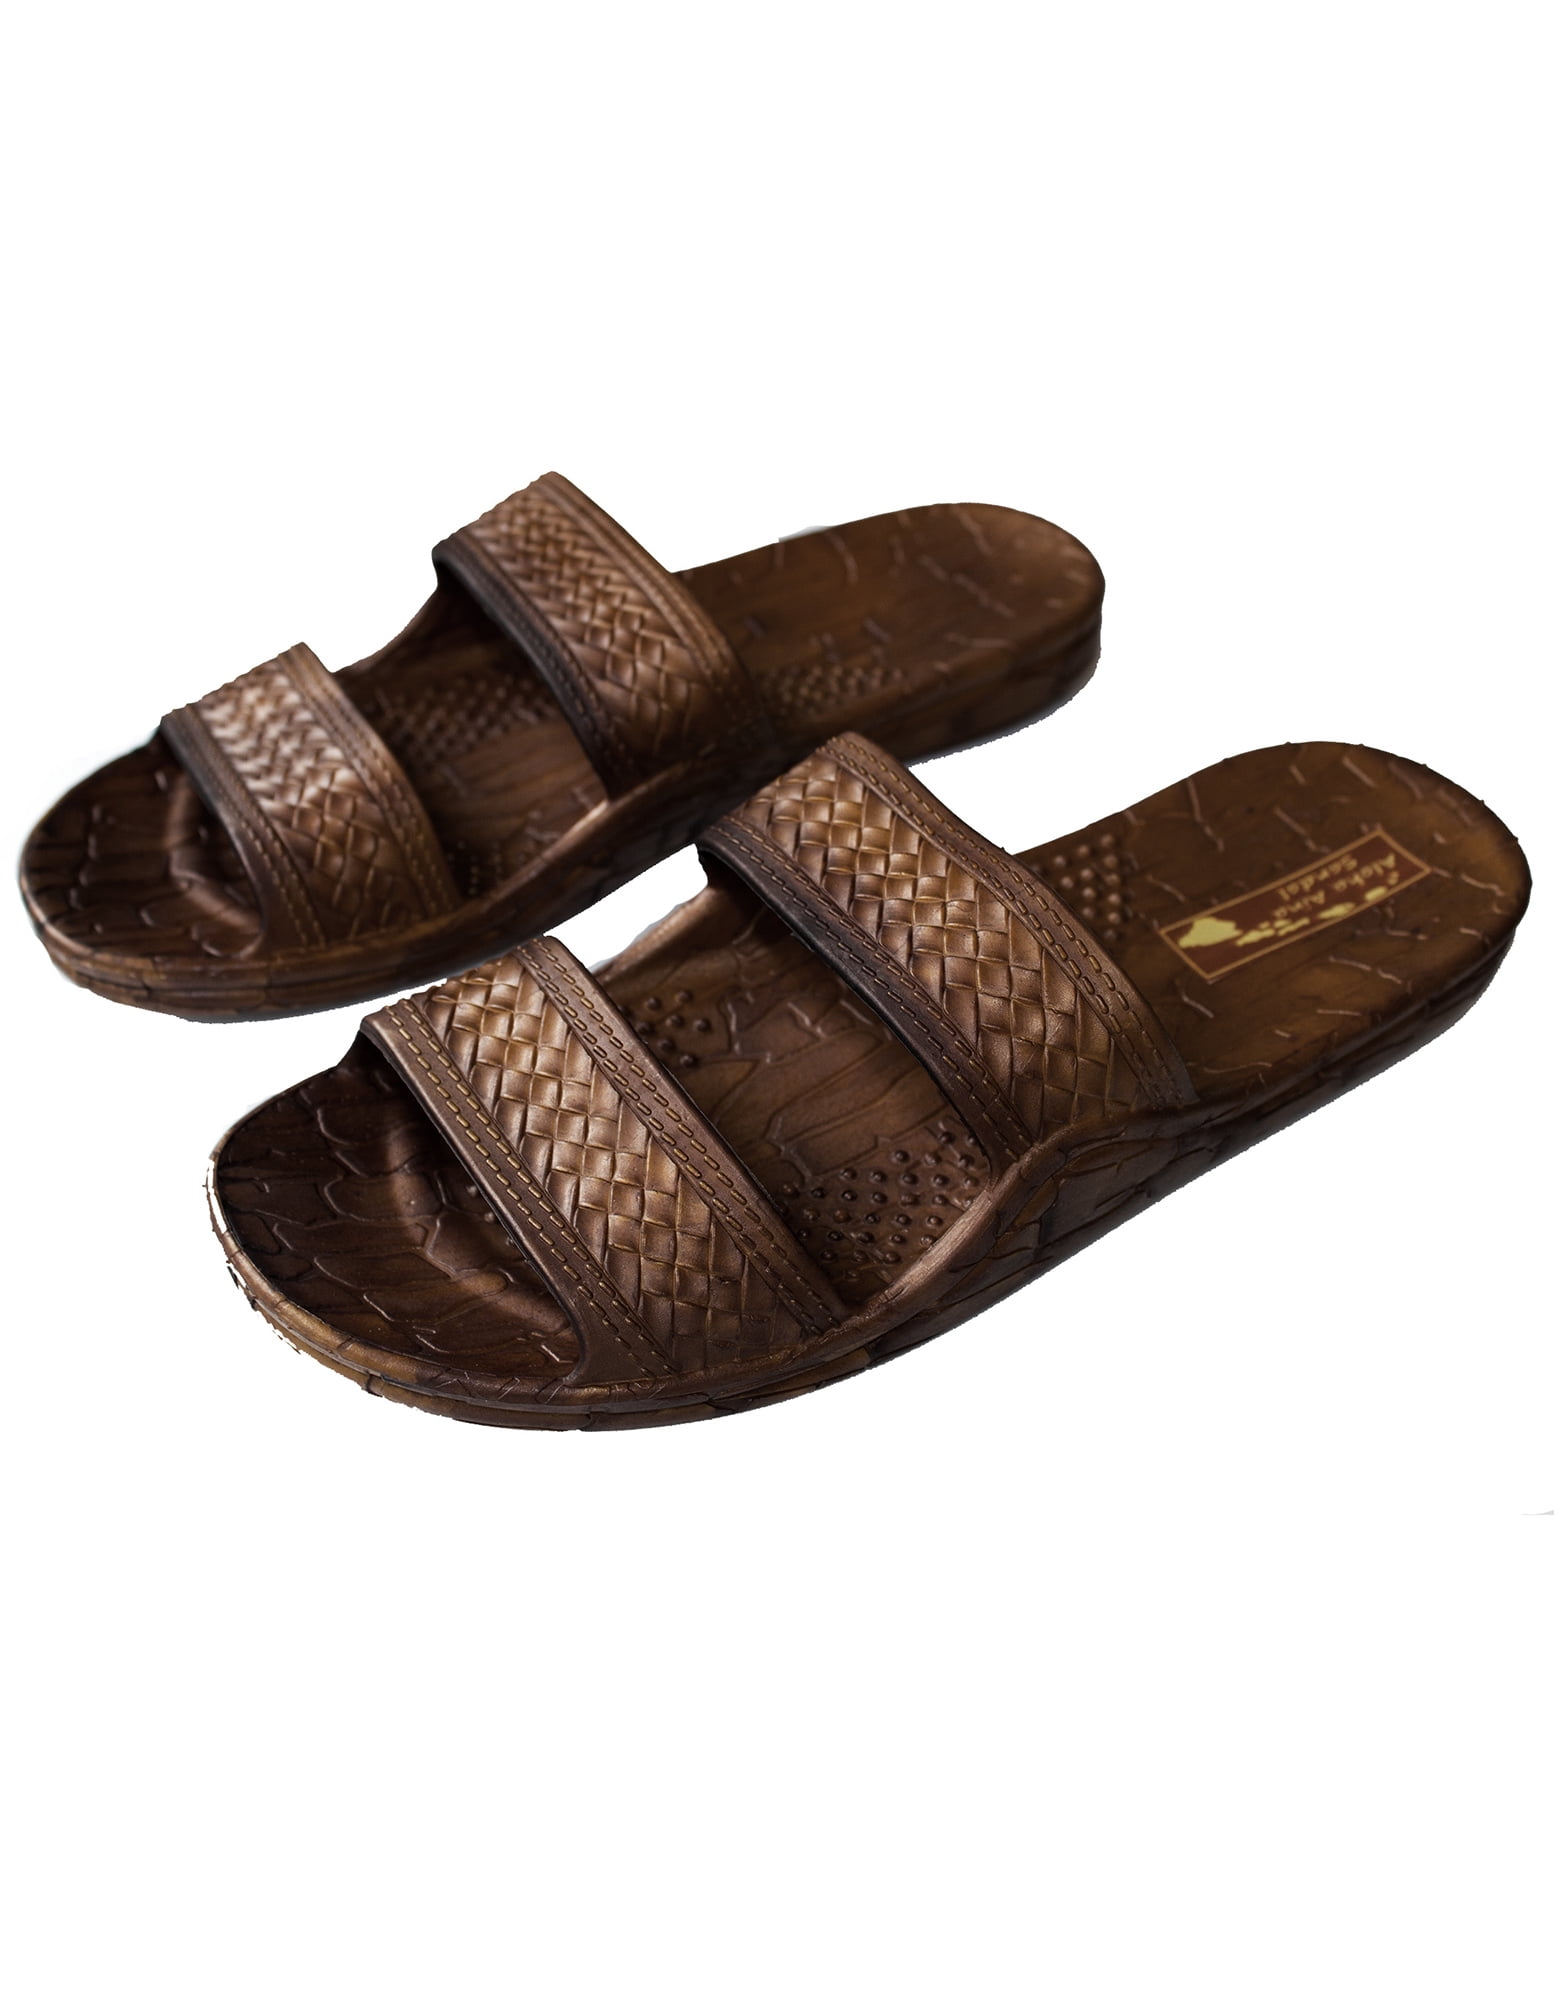 SALE going on now 🌴 | The Original Pali Hawaii Sandals - Alohaz